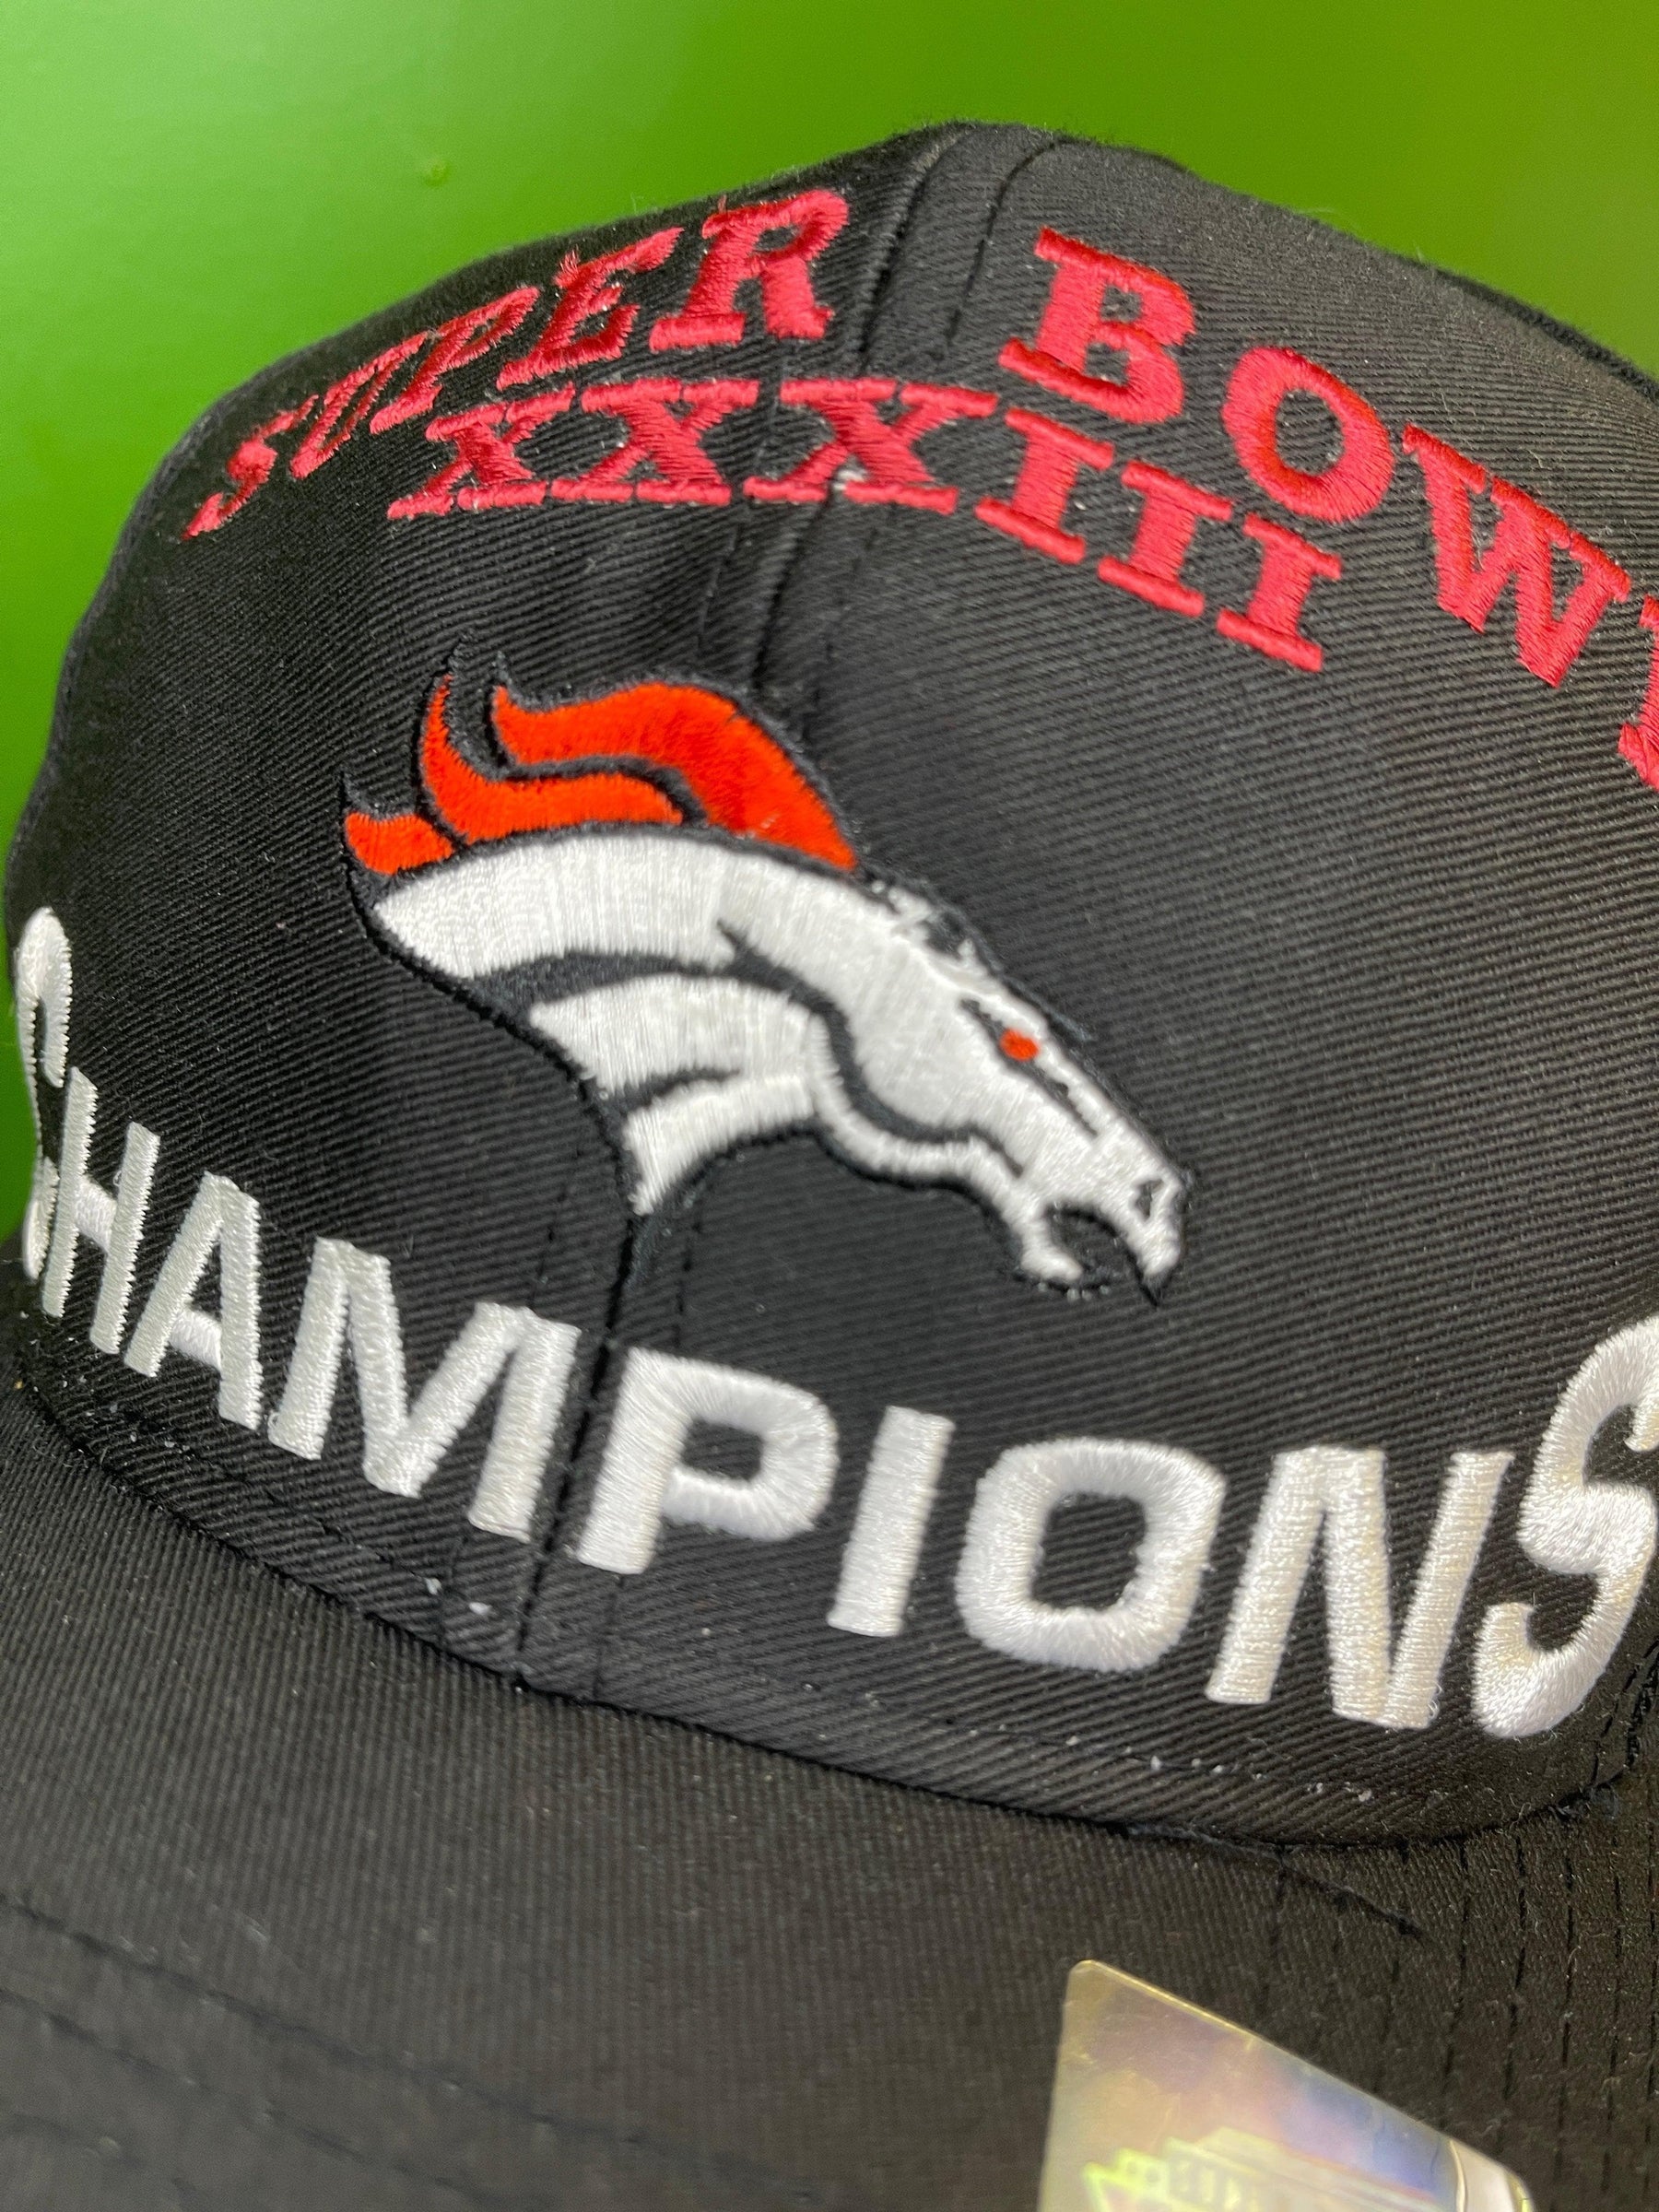 NFL Denver Broncos Logo 7 Vintage Super Bowl XXXIII Champions Hat/Cap Snapback OSFM